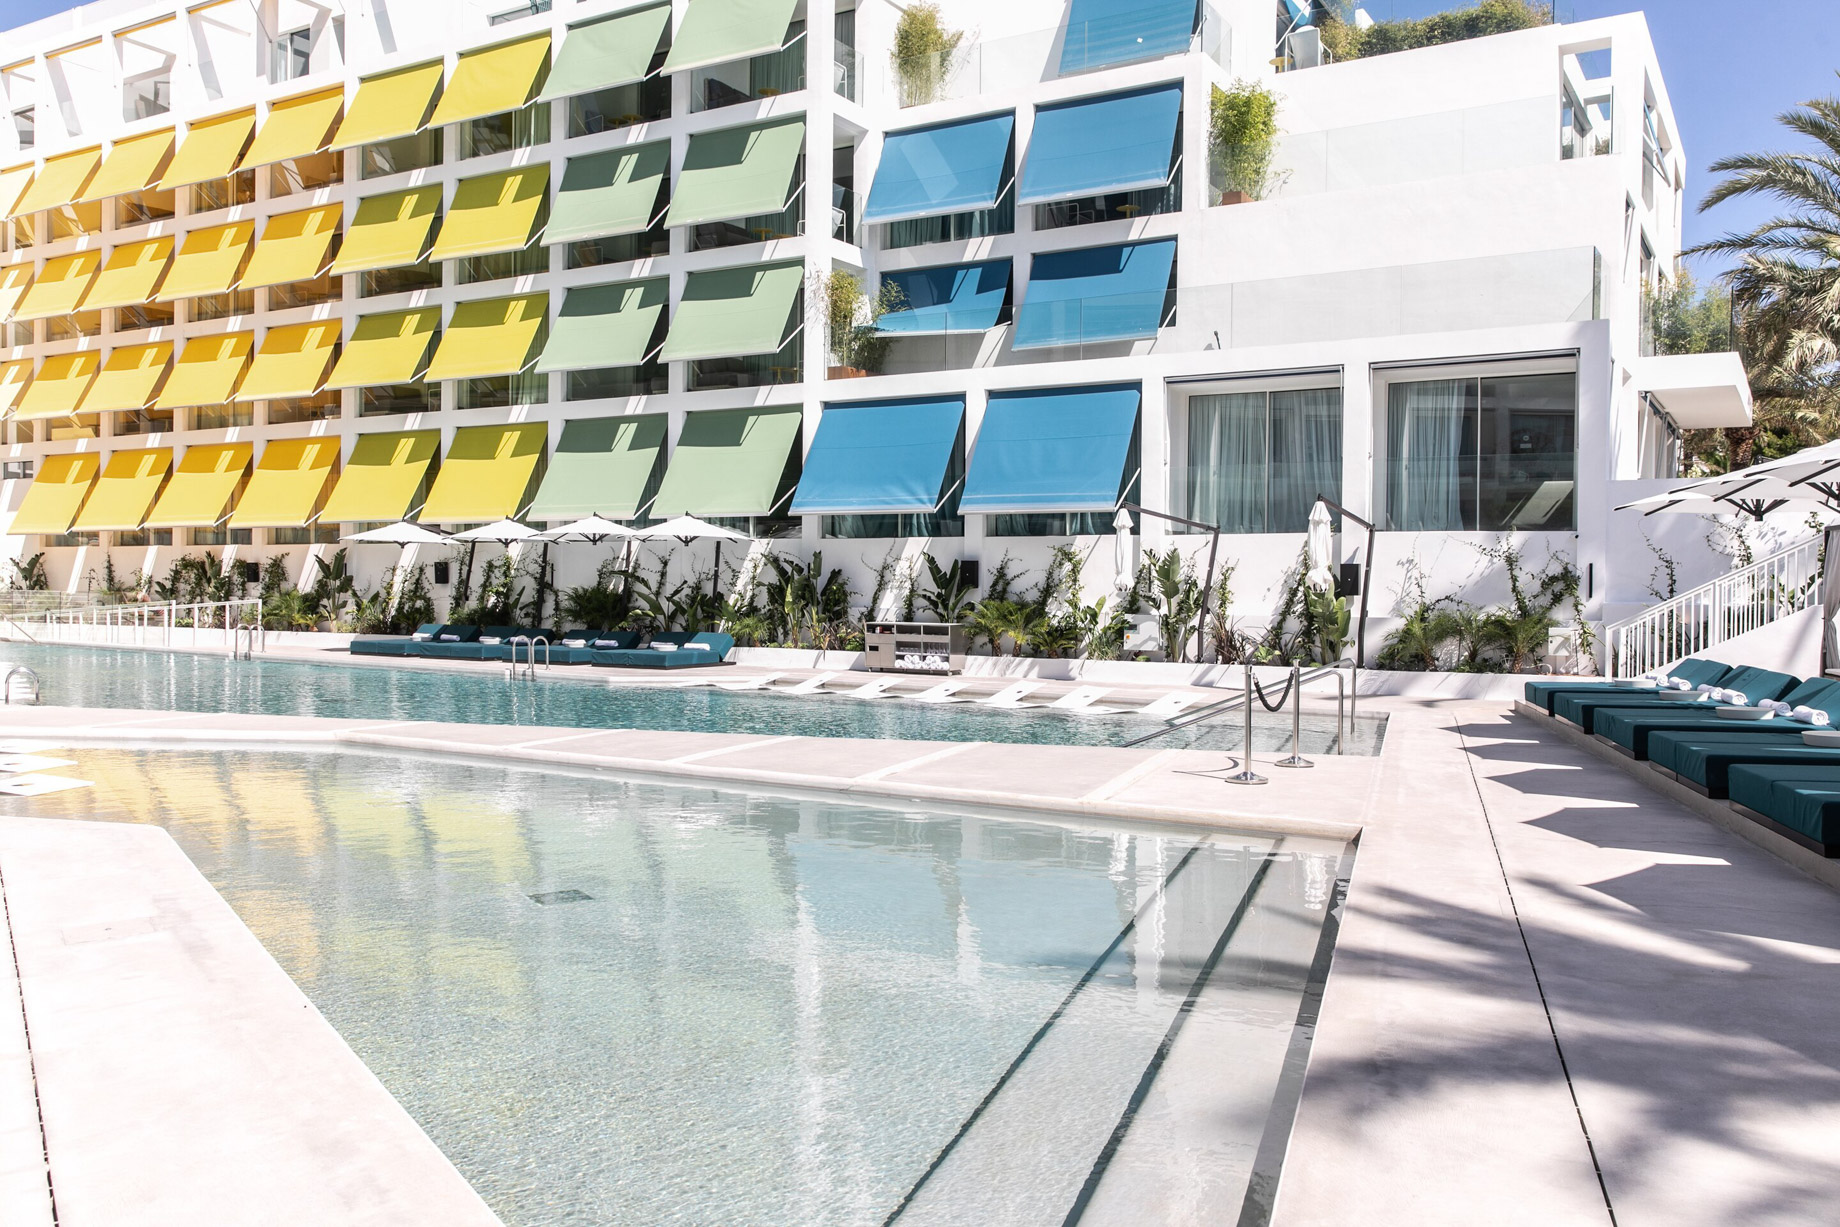 W Ibiza Hotel – Santa Eulalia del Rio, Spain – WET Deck Pool